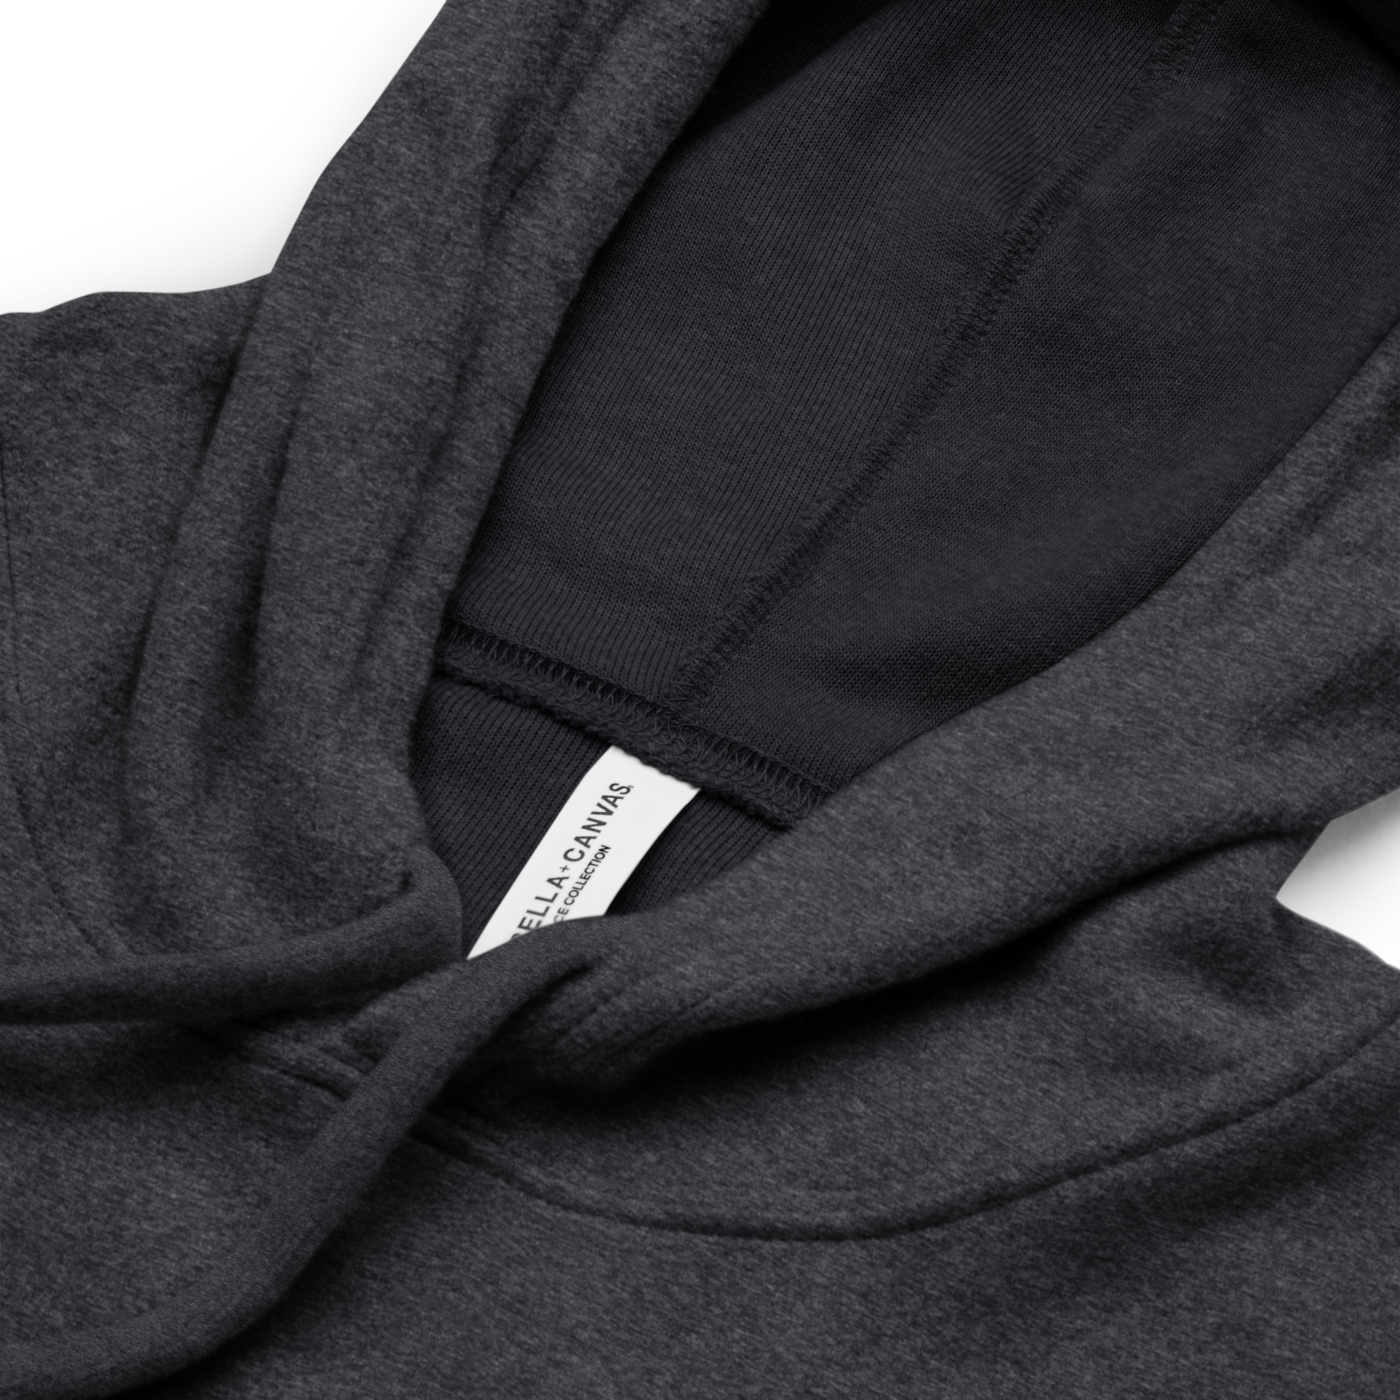 unisex sueded fleece hoodie black heather product details 630af1350422d